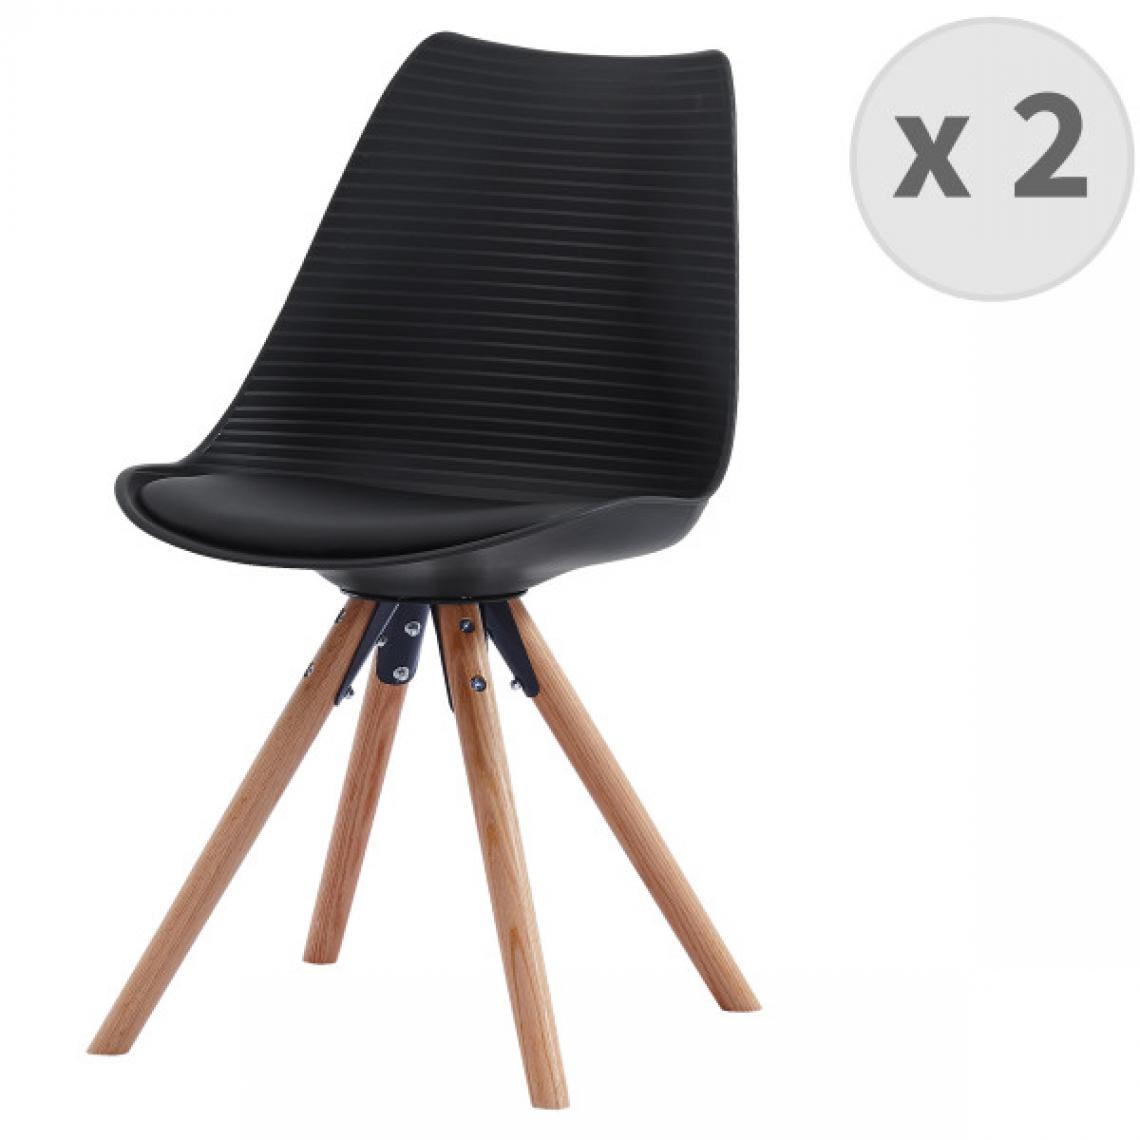 Moloo - CROSS-Chaise scandinave noir pieds chêne (x2) - Chaises